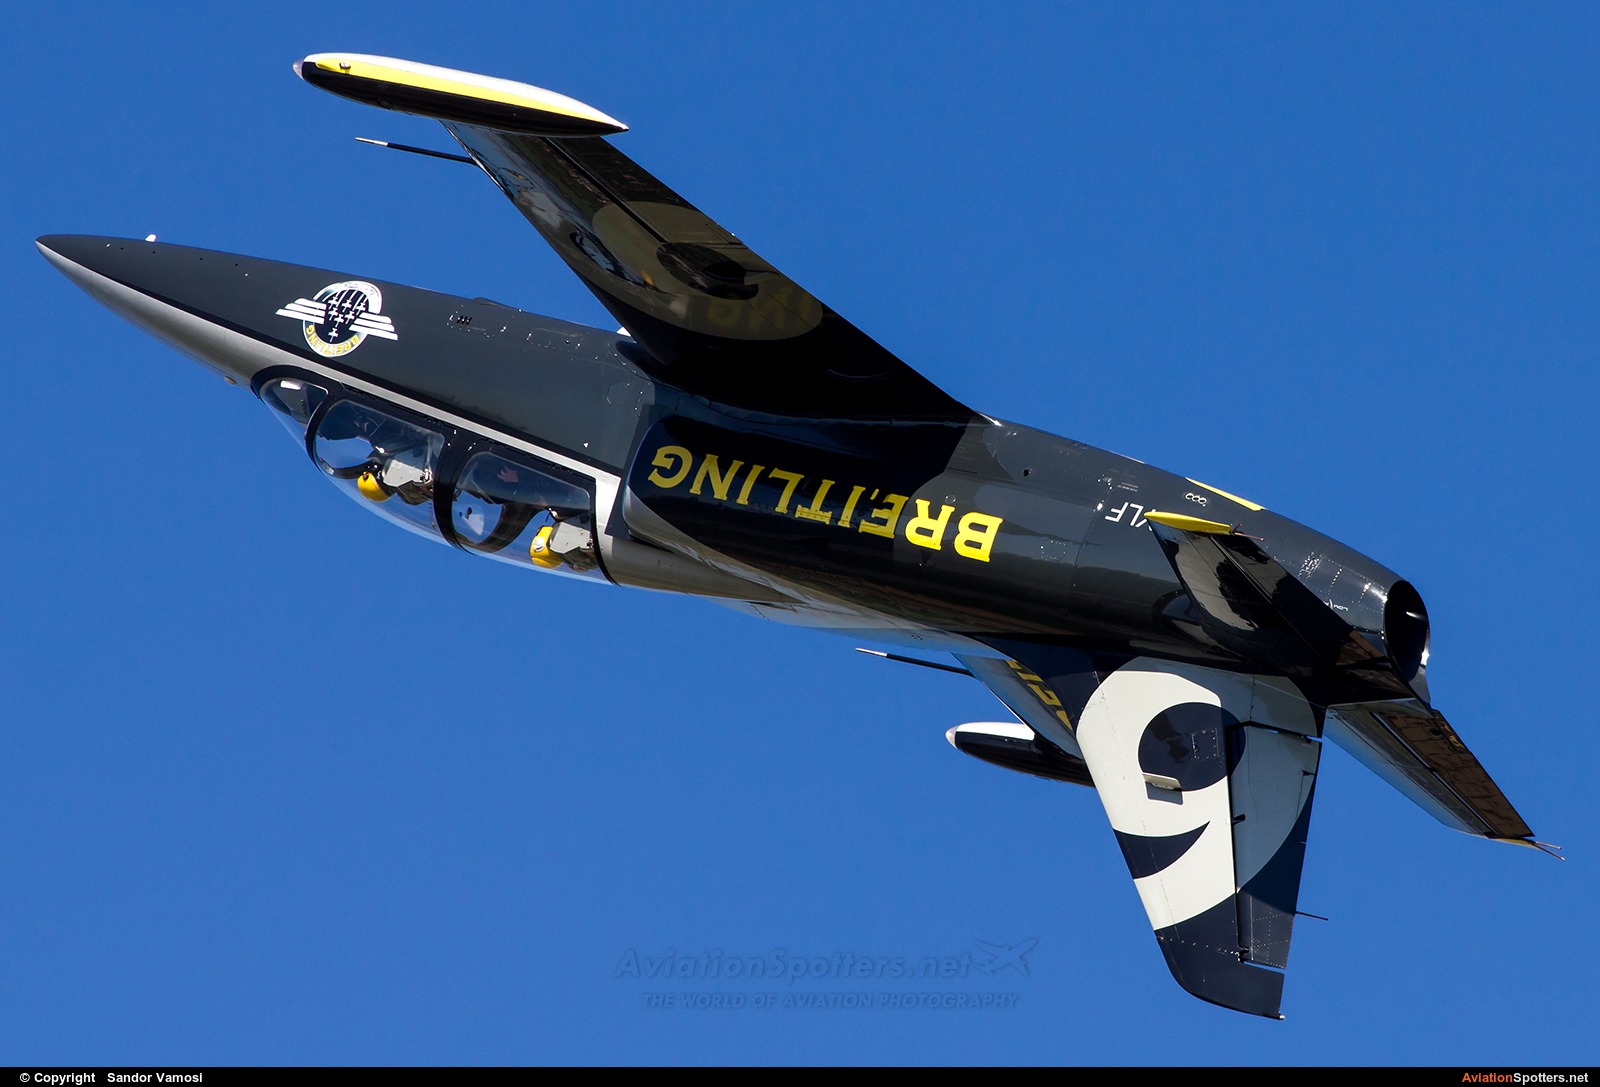 Breitling Jet Team  -  L-39C Albatros  (ES-YLF) By Sandor Vamosi (ALEX67)